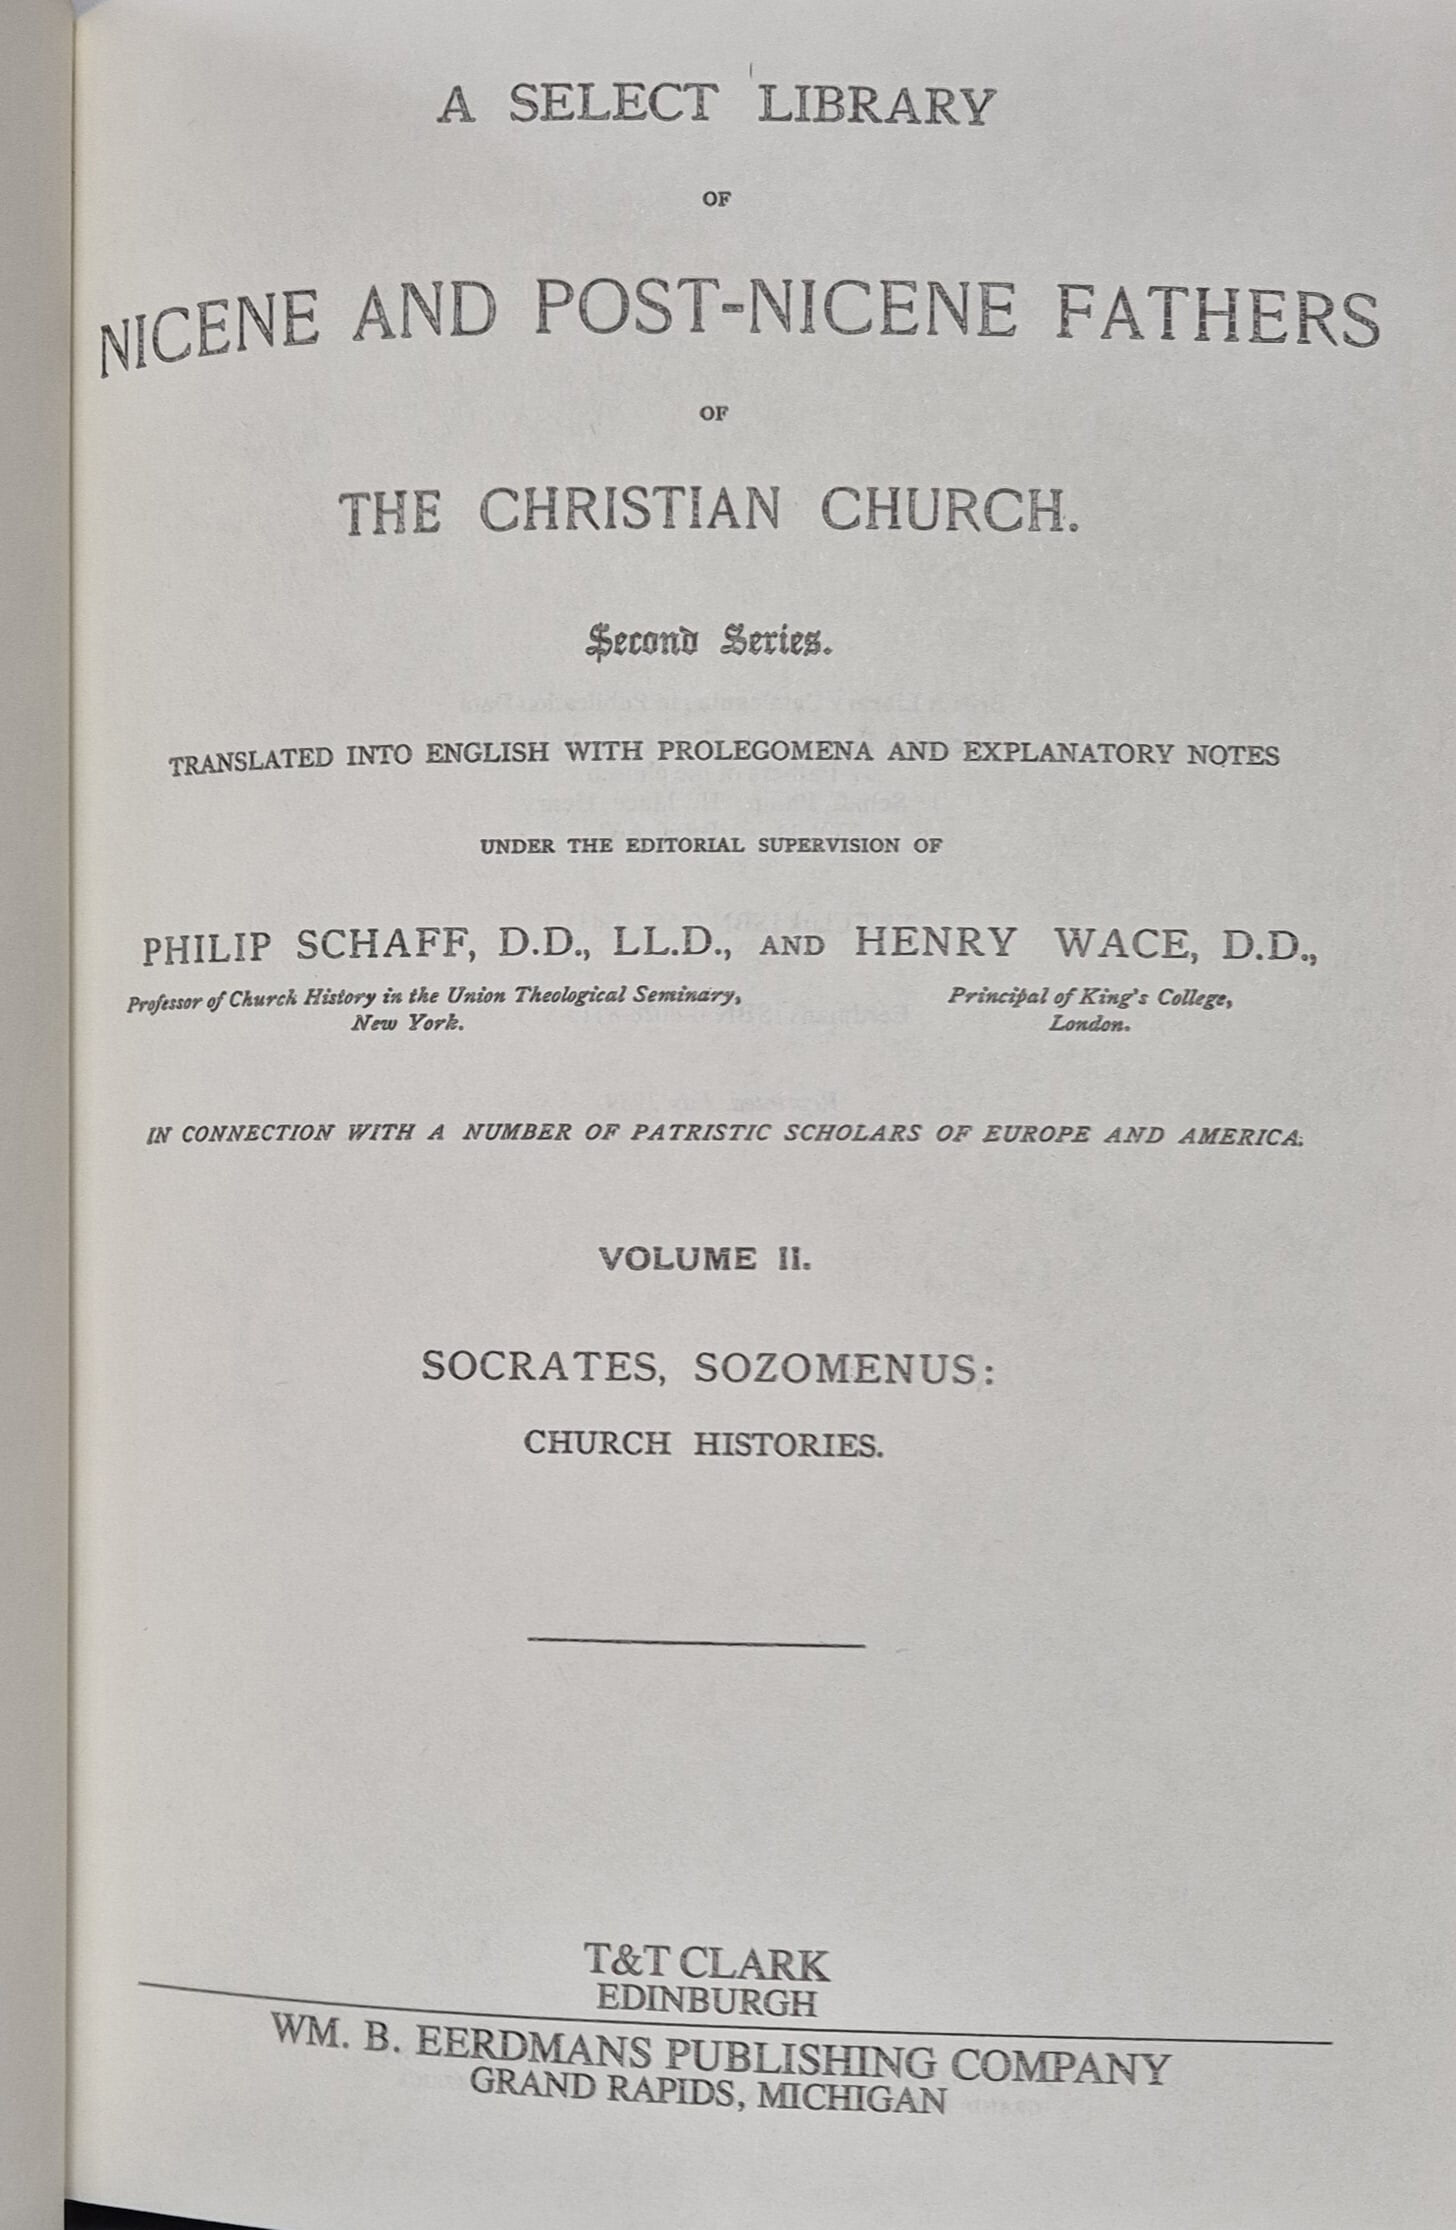 Nicene and Post-Nicene Fathers of the Christian Church - Vol.II Socrates, Sozomenus : Church Histories(Second Series)